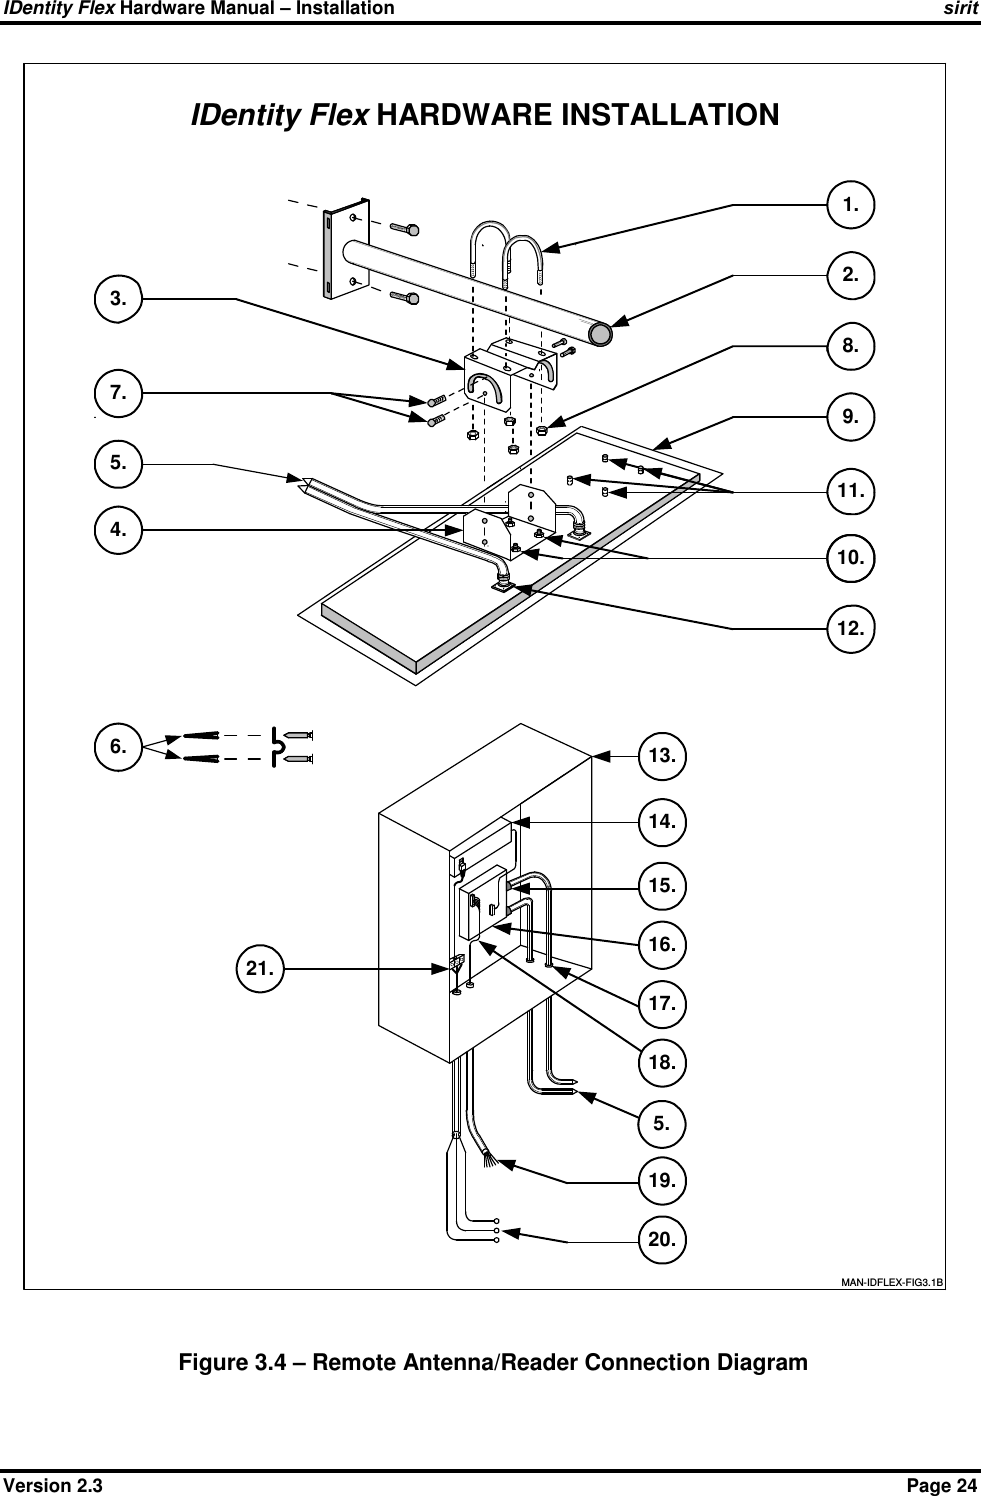 IDentity Flex Hardware Manual – Installation    sirit Version 2.3    Page 24  Figure 3.4 – Remote Antenna/Reader Connection Diagram   IDentity Flex HARDWARE INSTALLATION2.3.8.7.11.9.12.4.5.13.15.14.16.6.17.21.18.19.20.10.1.5.MAN-IDFLEX-FIG3.1B